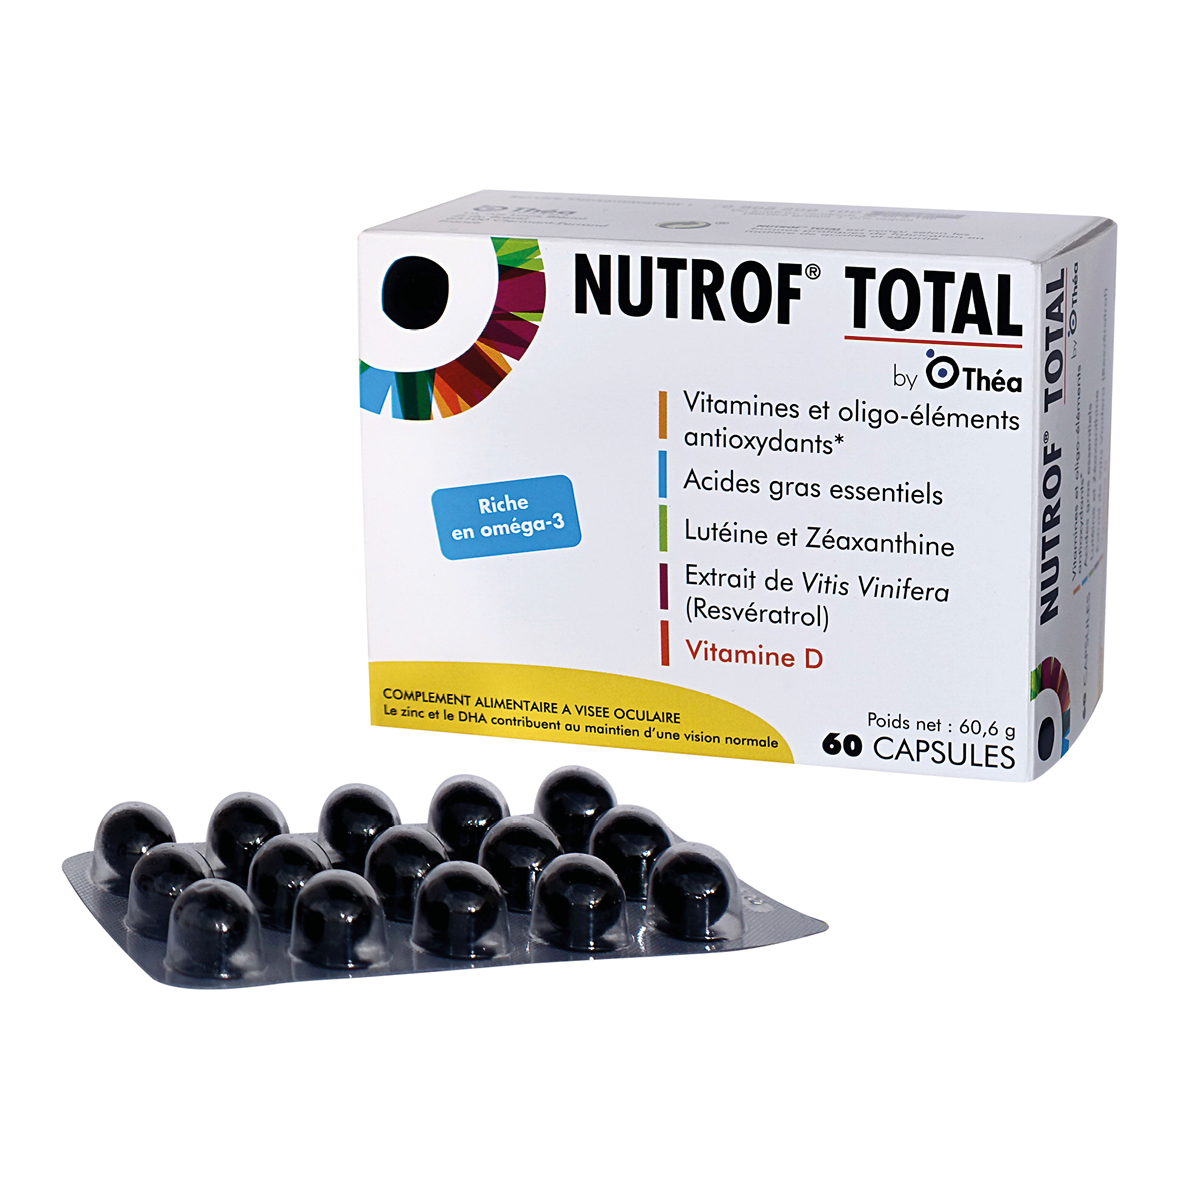 NUTROF TOTAL® 60 CAPSULES Image